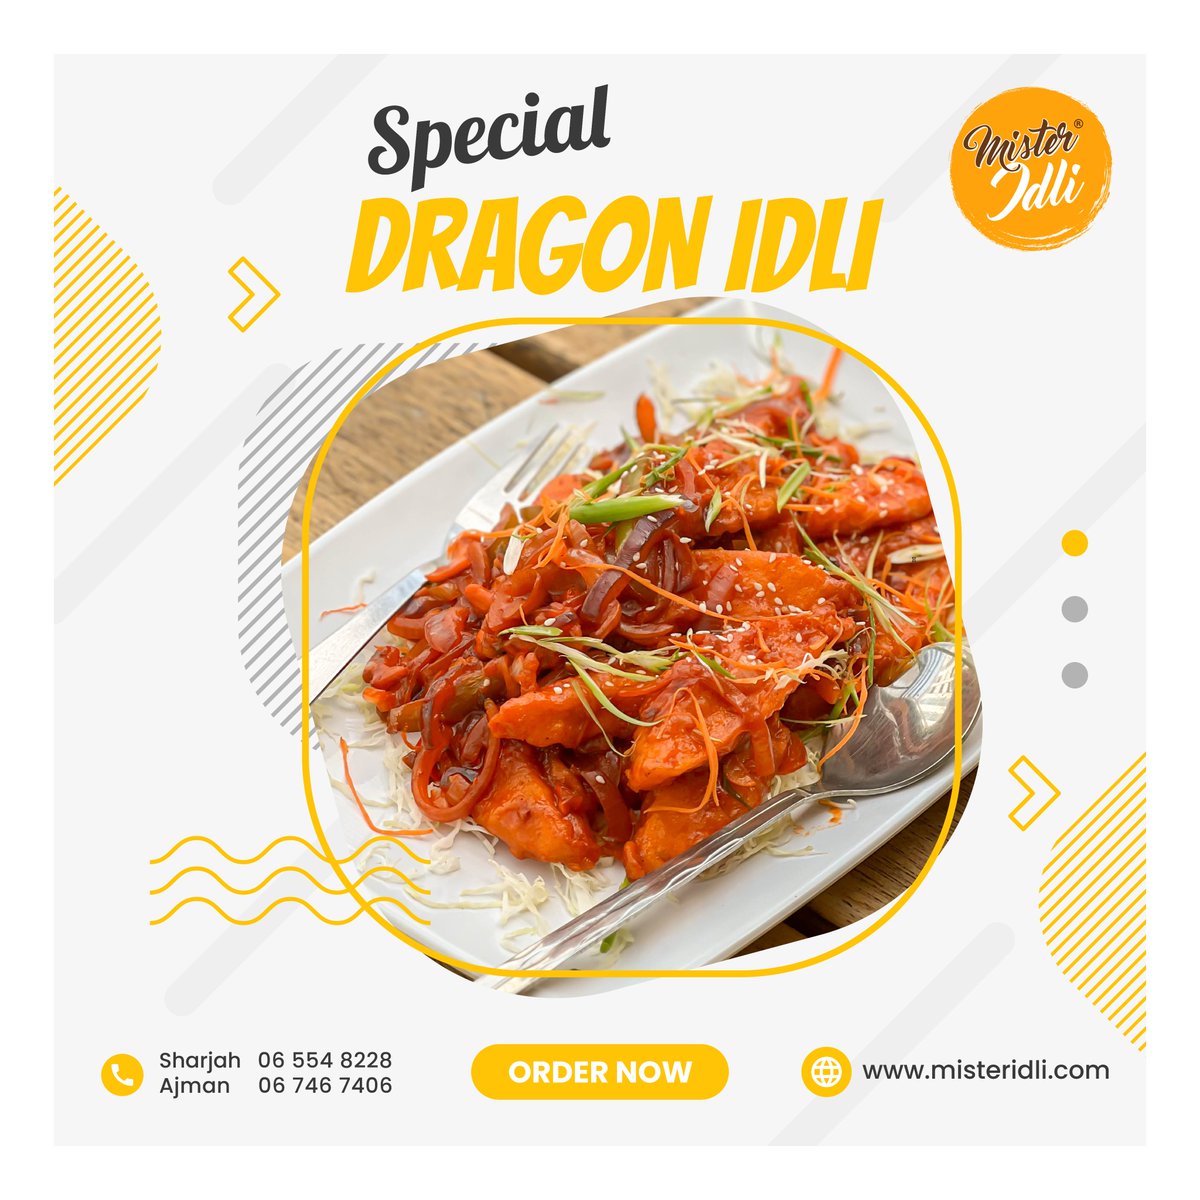 Prepare to be mesmerized by the dragon's dance of flavors in Dragon Idli! 
.
.
#DragonIdli #UAEfoodie #FusionFood #SouthIndianFusion #MisterIdli #MisterIdliAjman #MisterIdliSharjah